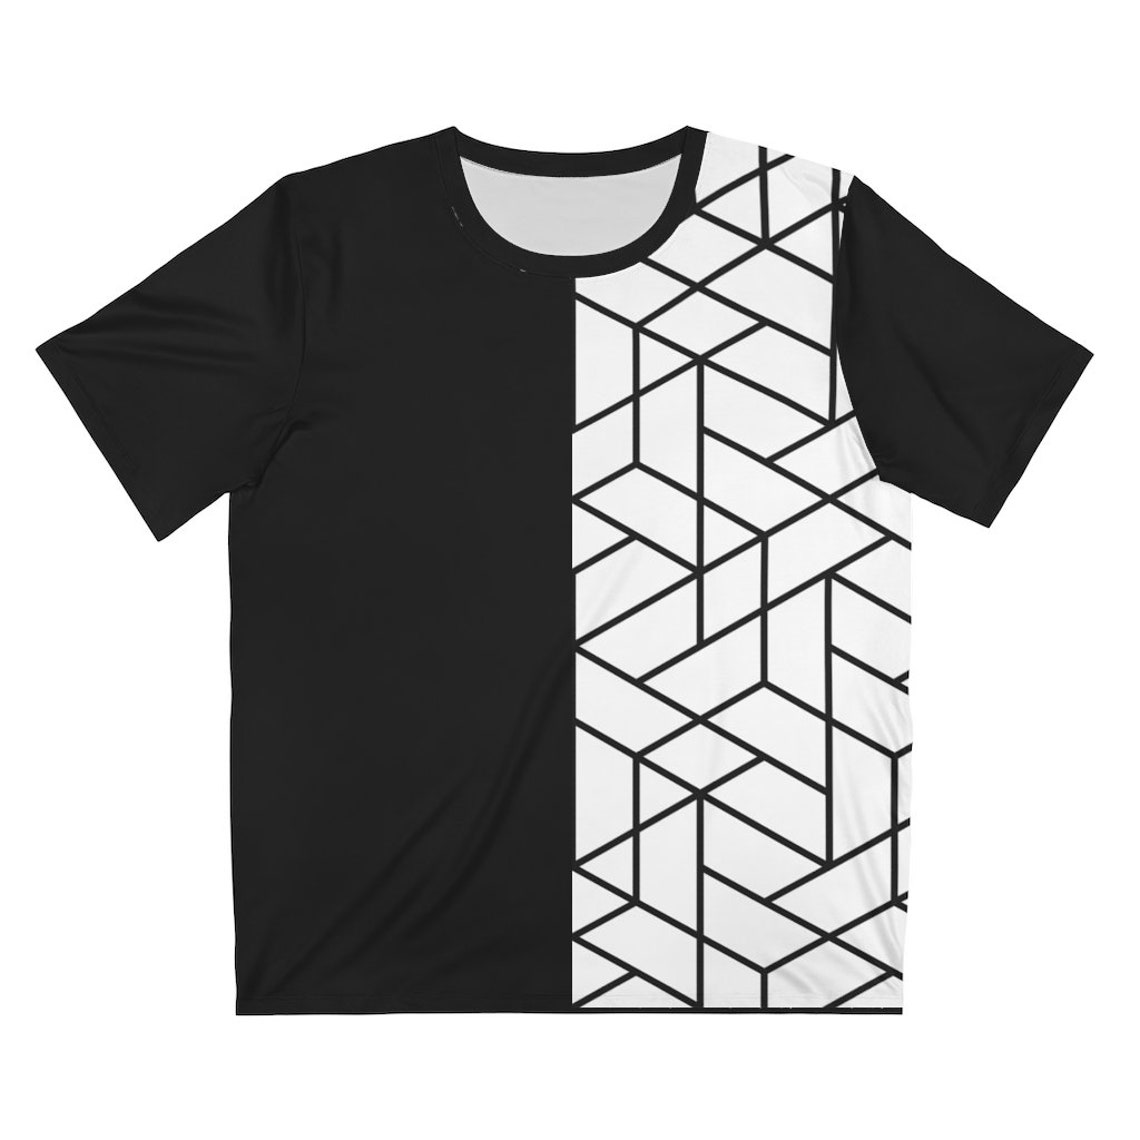 Unisex AOP Cut & Sew T-Shirt Black and White Design | Etsy